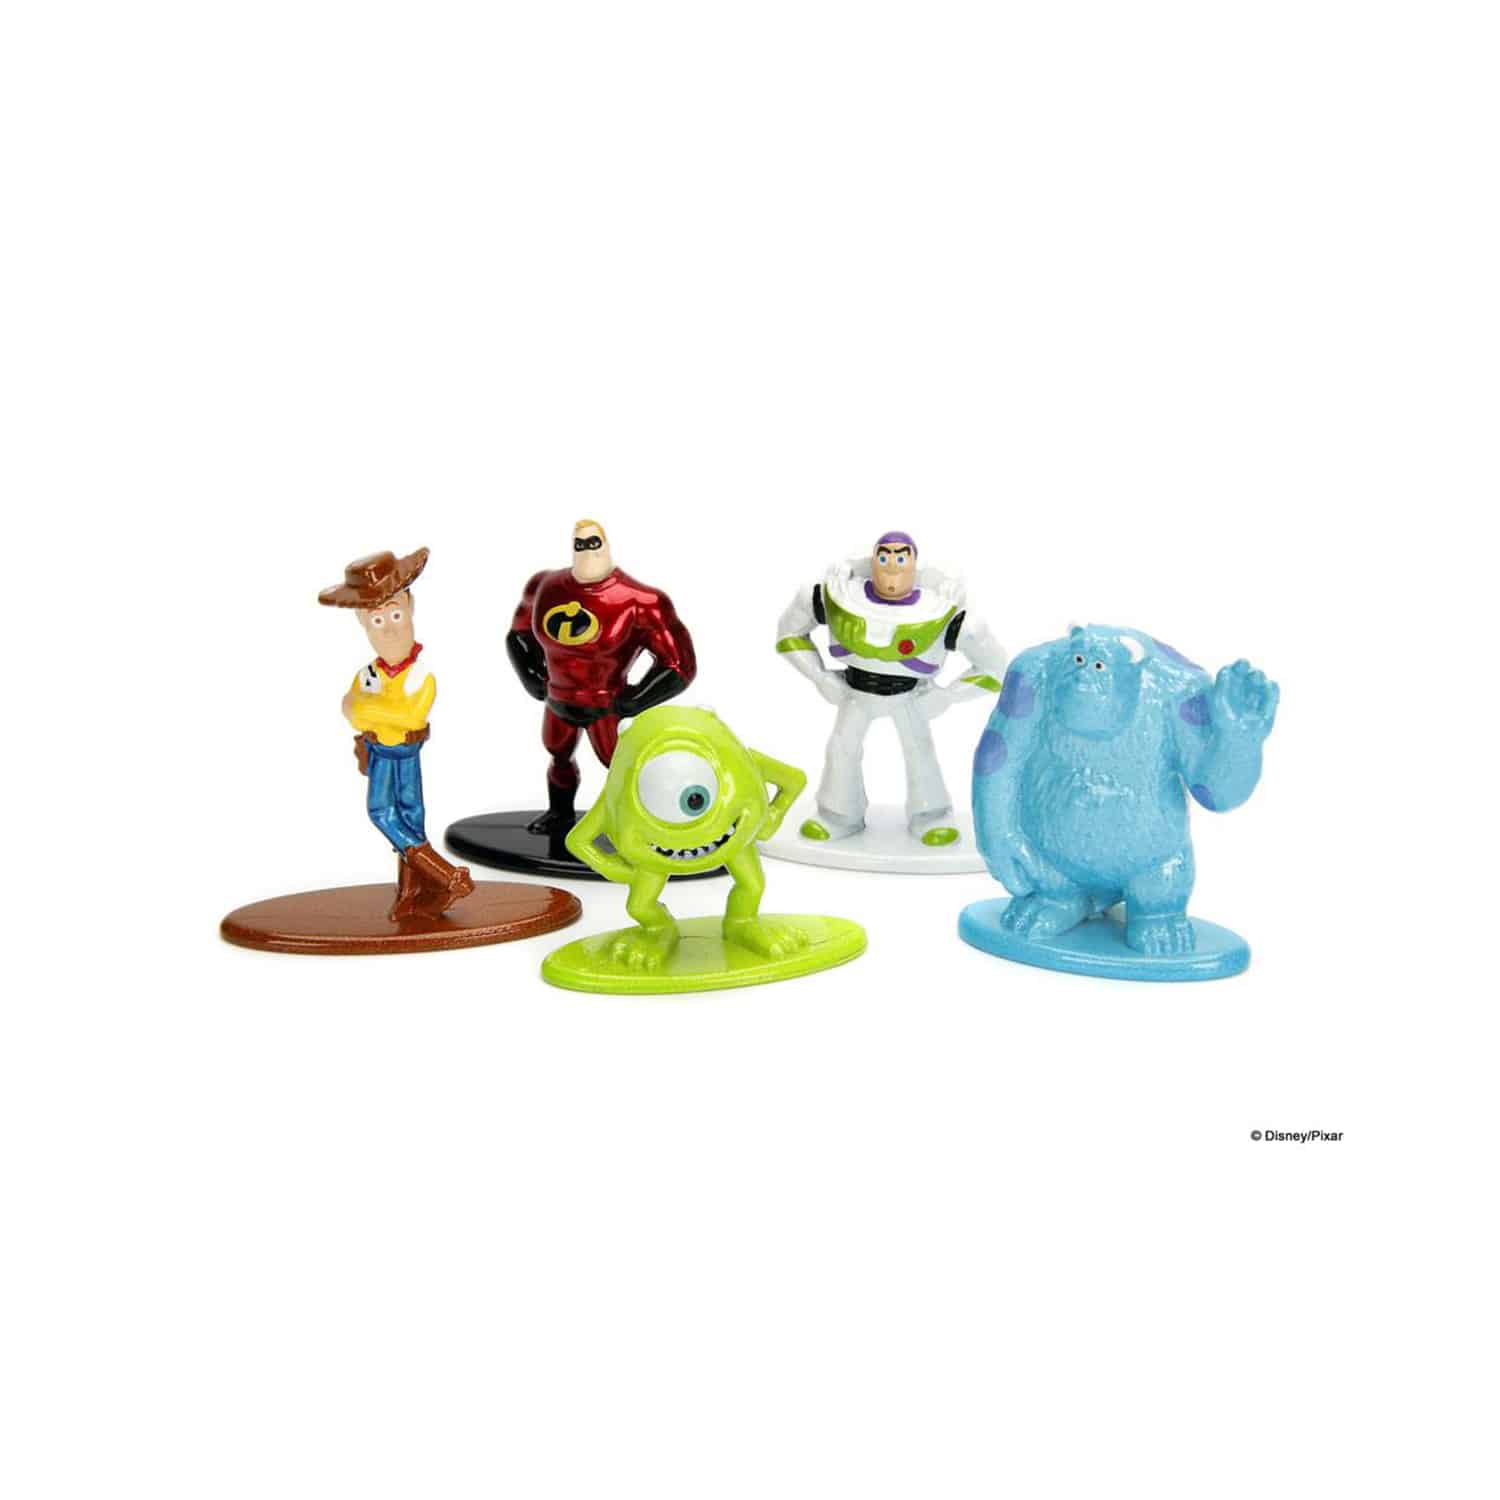 Disney - Pixar 5-pack Nano Metalfigs Diecast Mini Figures